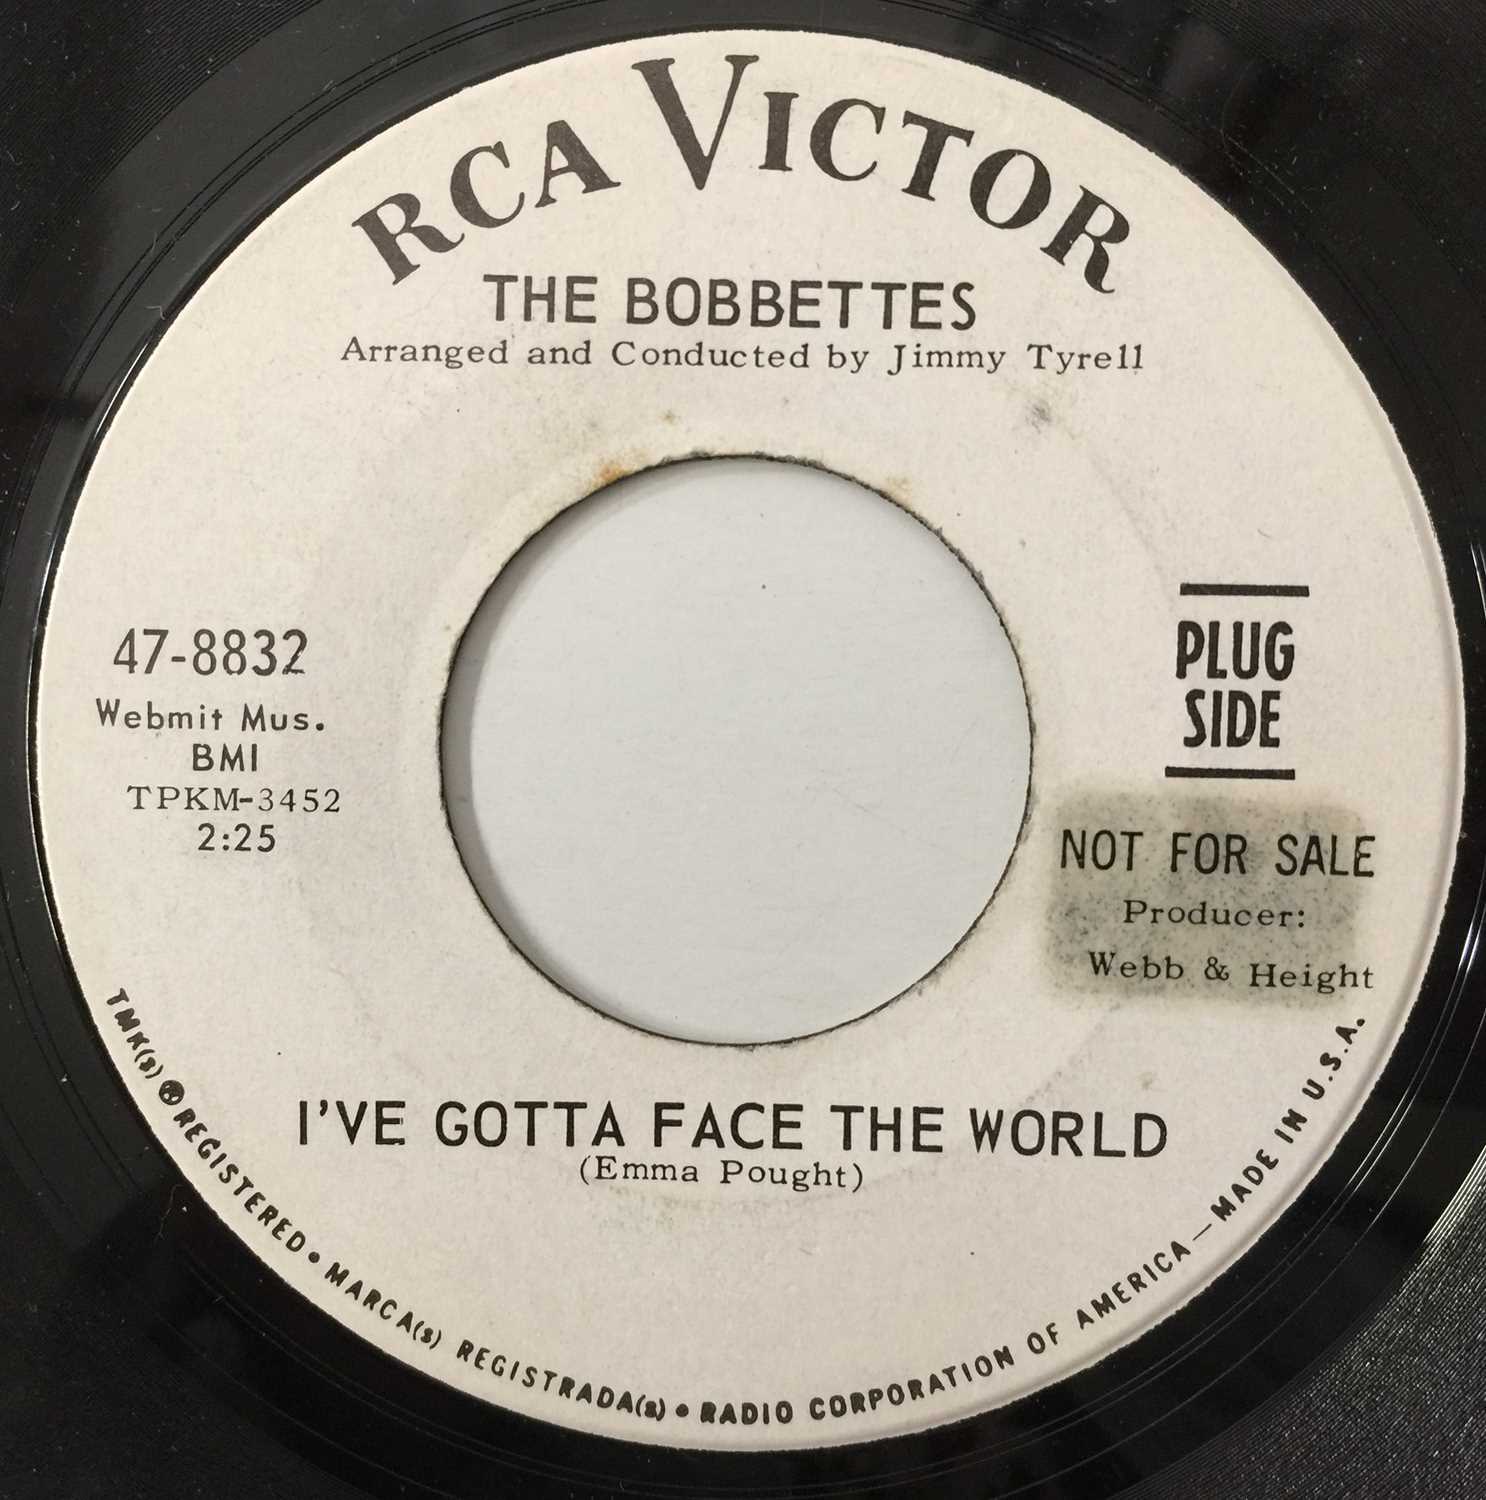 THE BOBBETTES - I'VE GOTTA FACE THE WORLD 7" (US PROMO - RCA VICTOR - 47-8832) - Image 2 of 3